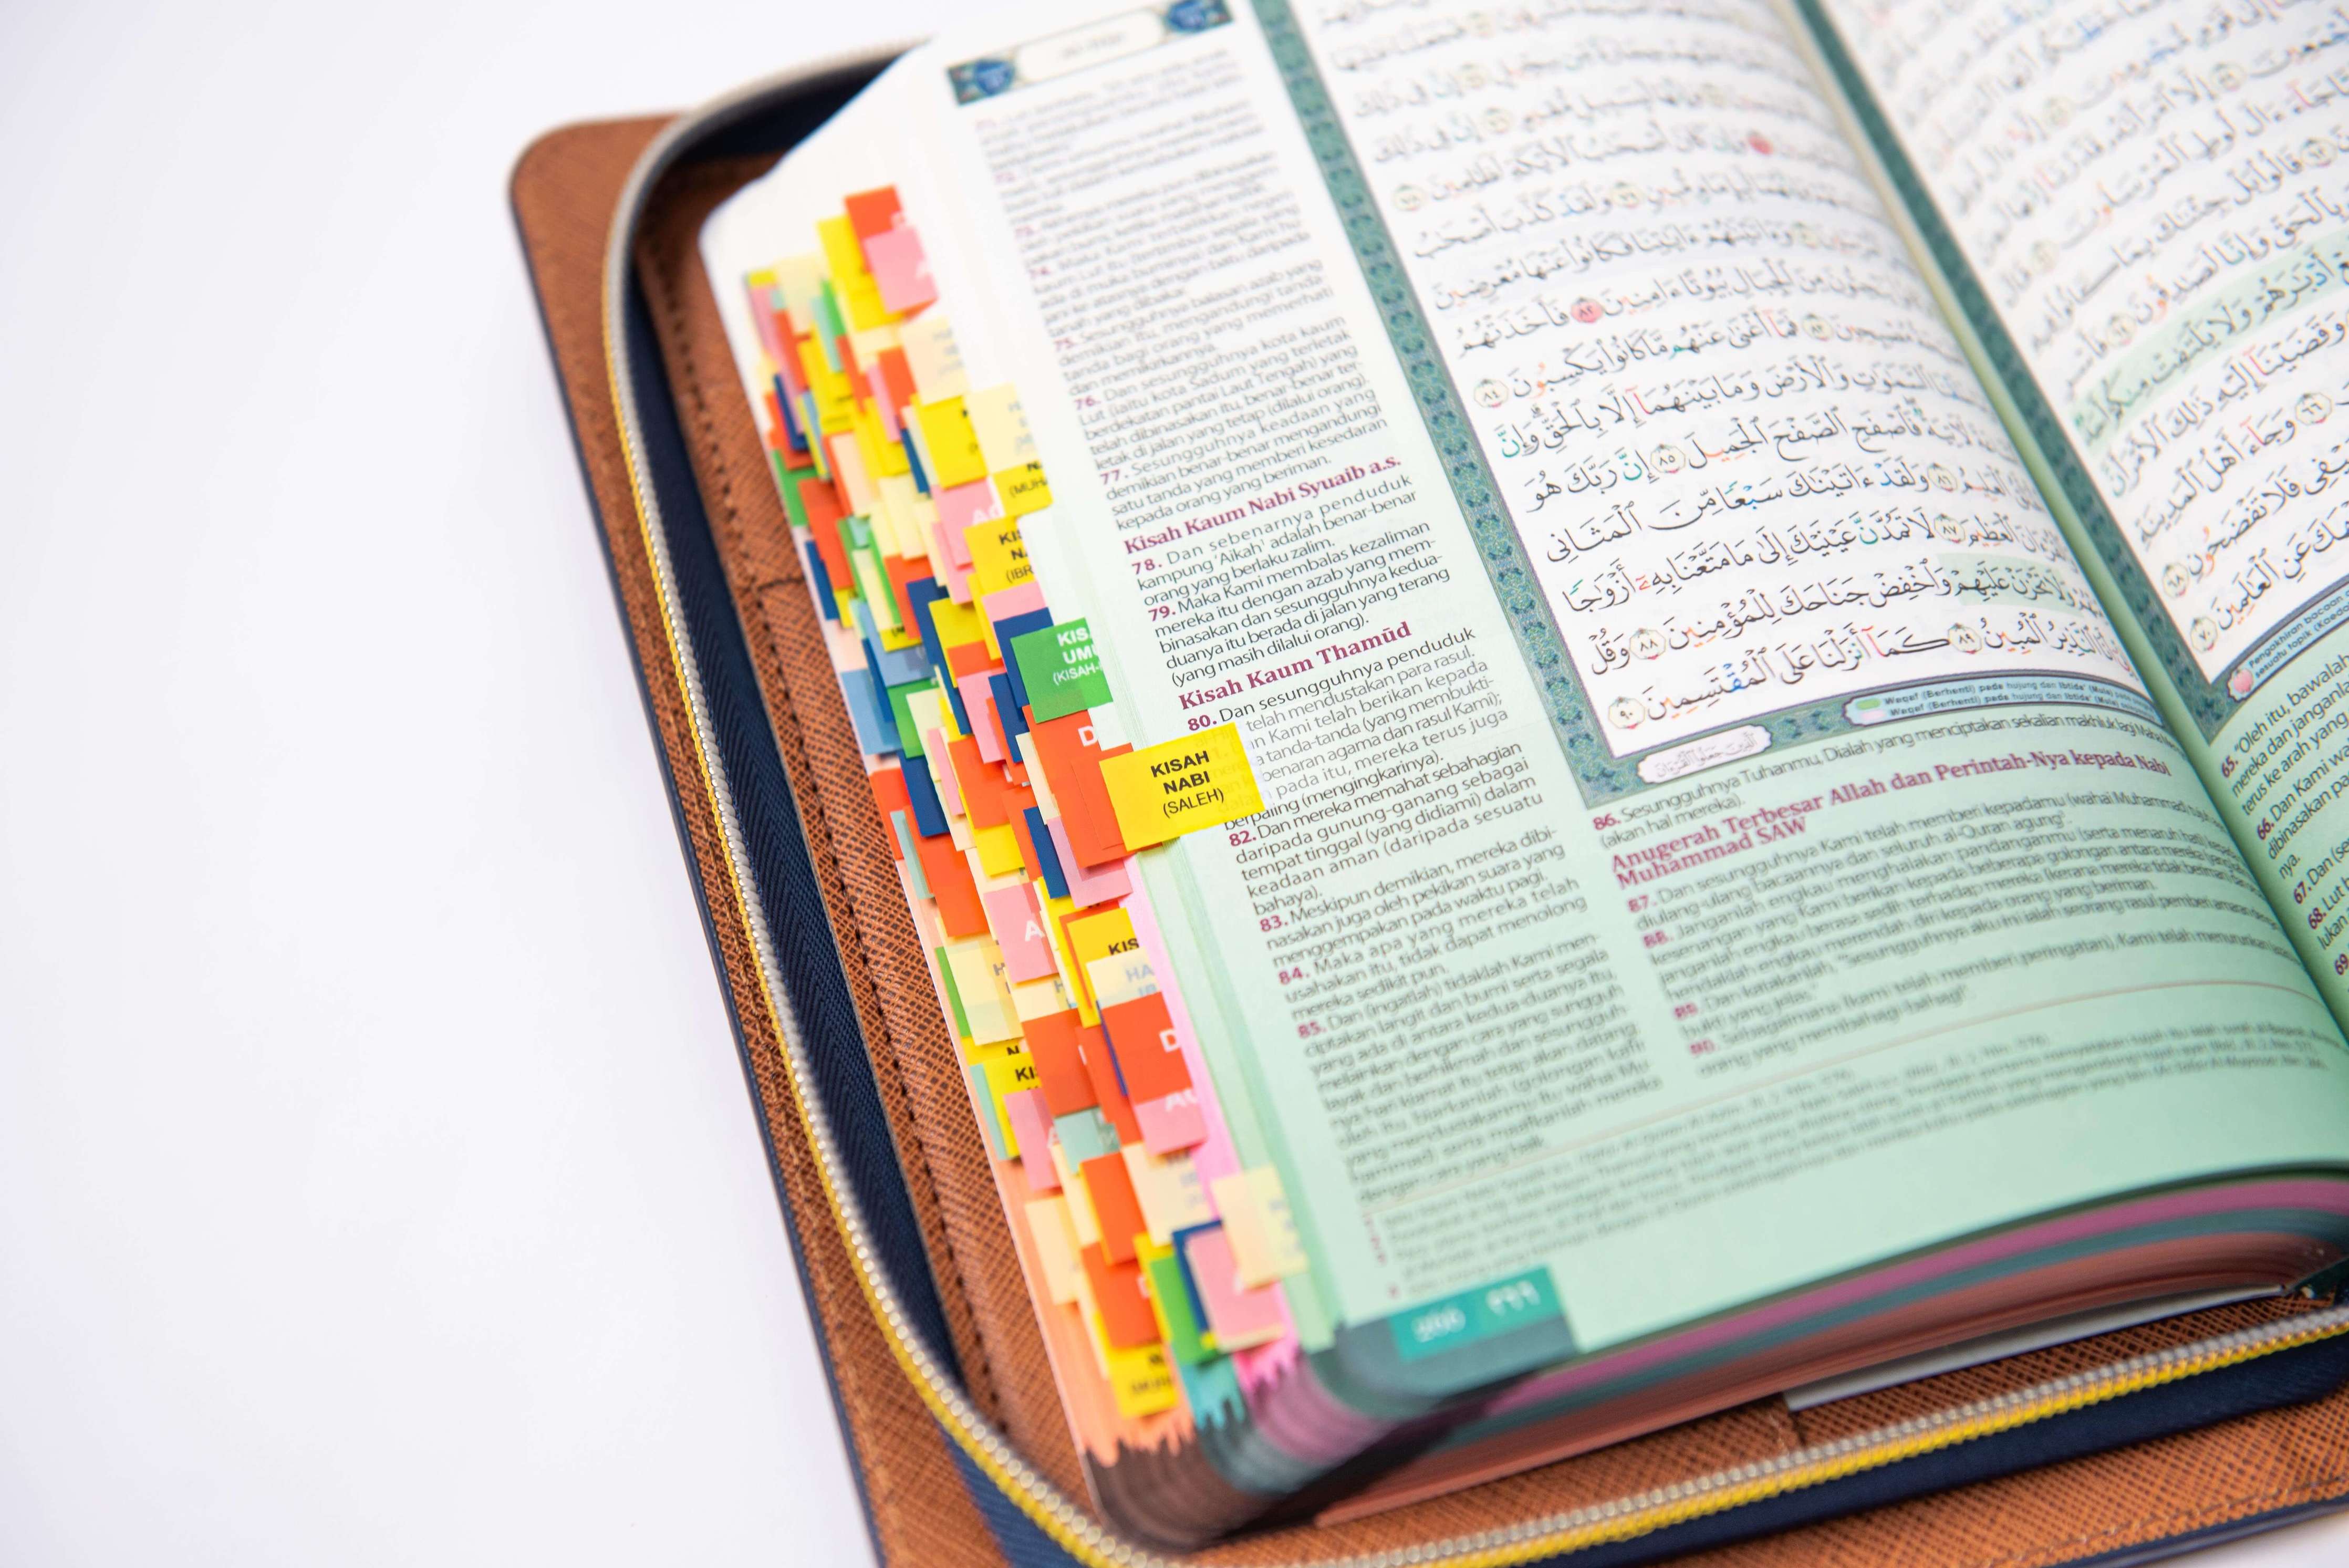 Al-Quran Al-Karim & Terjemahan Al-Ghufran (Zip Songket) (Tagging) - (TBAQ1054)